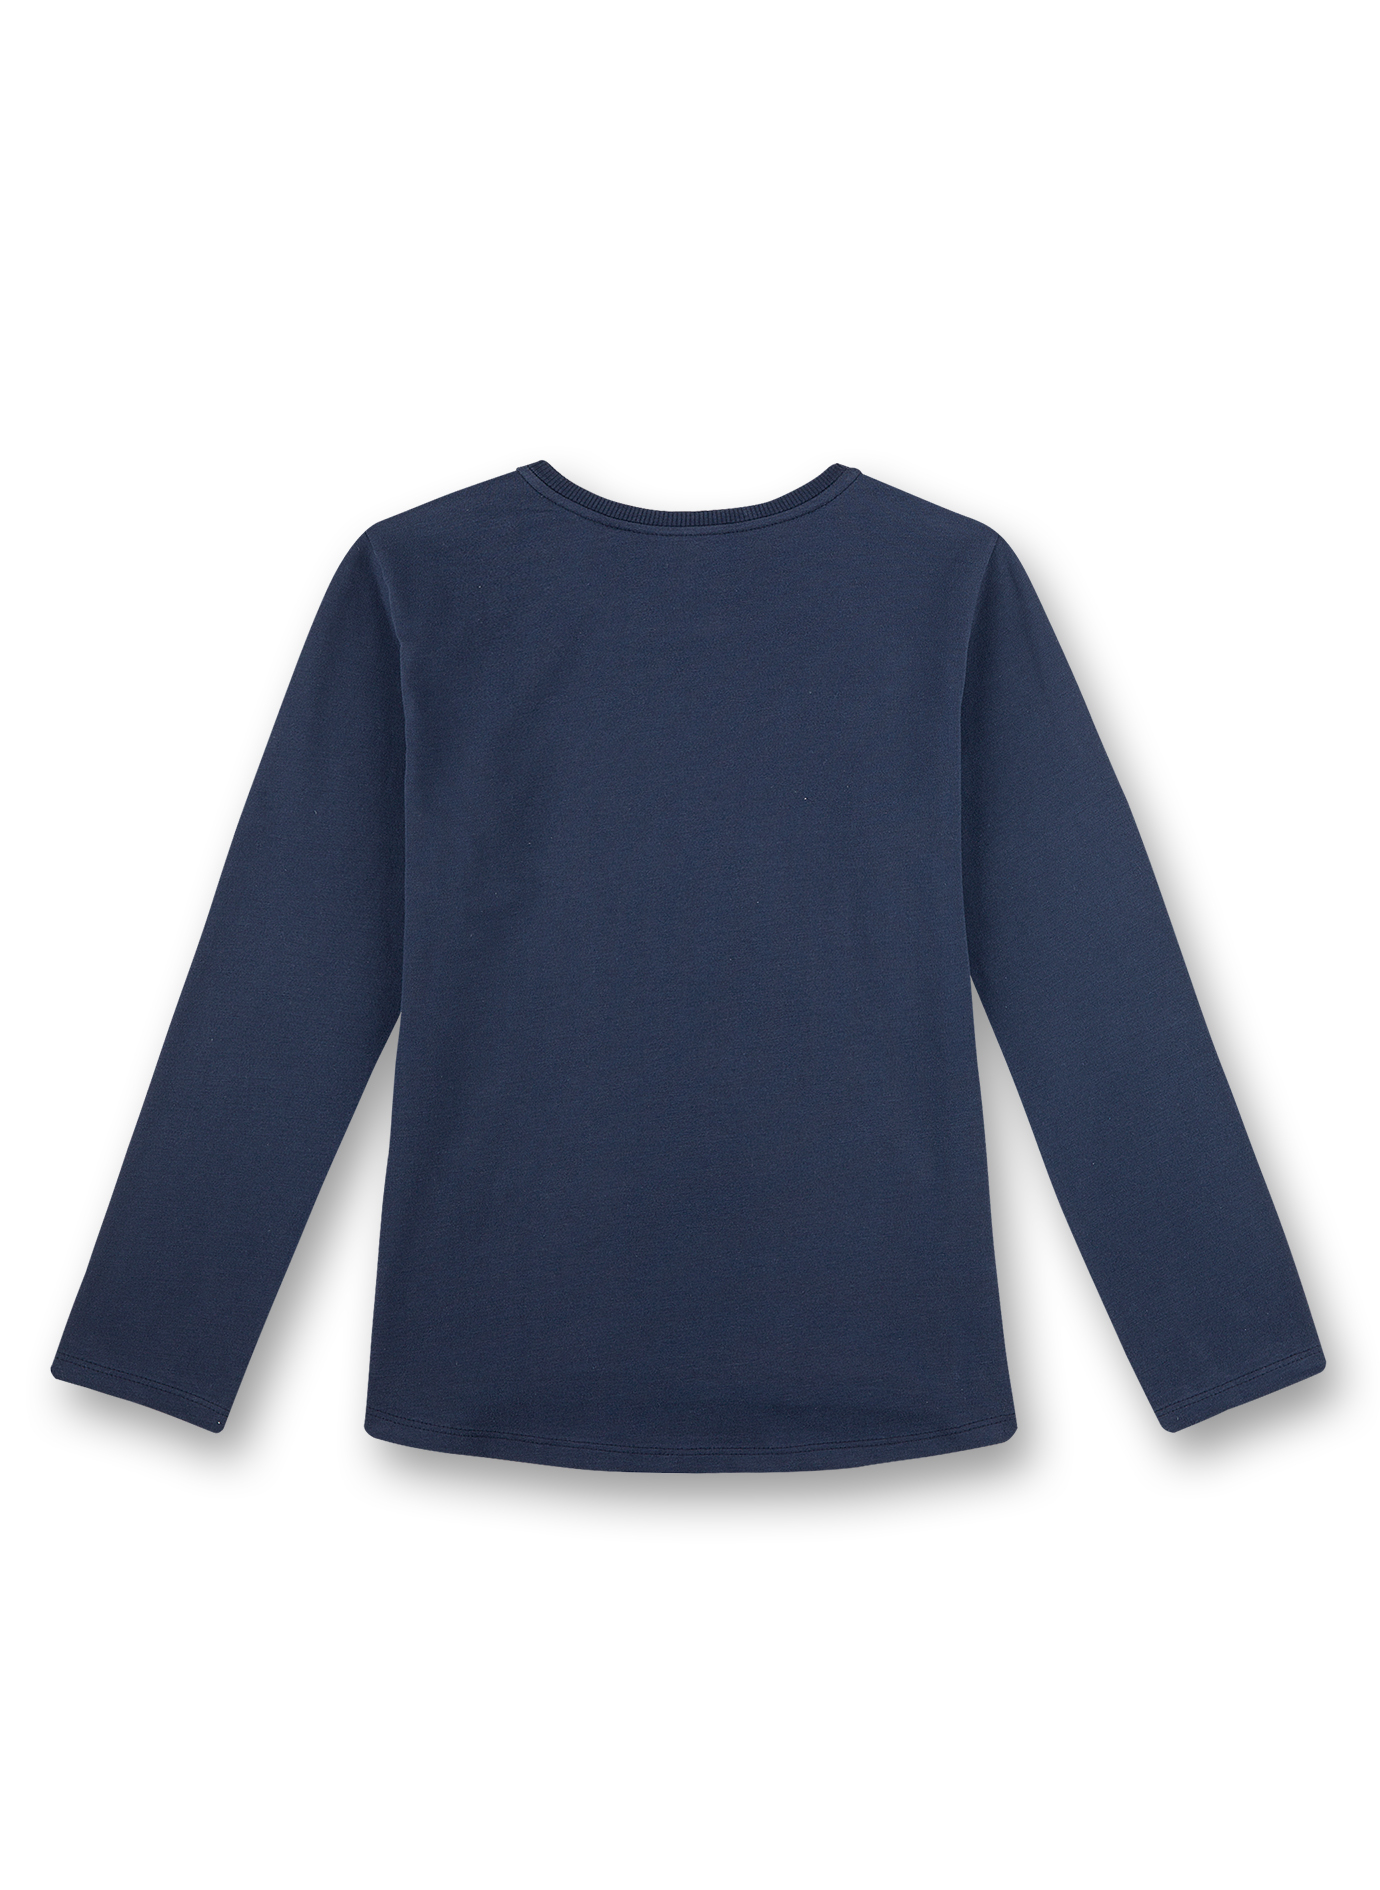 Mädchen-Shirt Langarm Blau Athleisure 